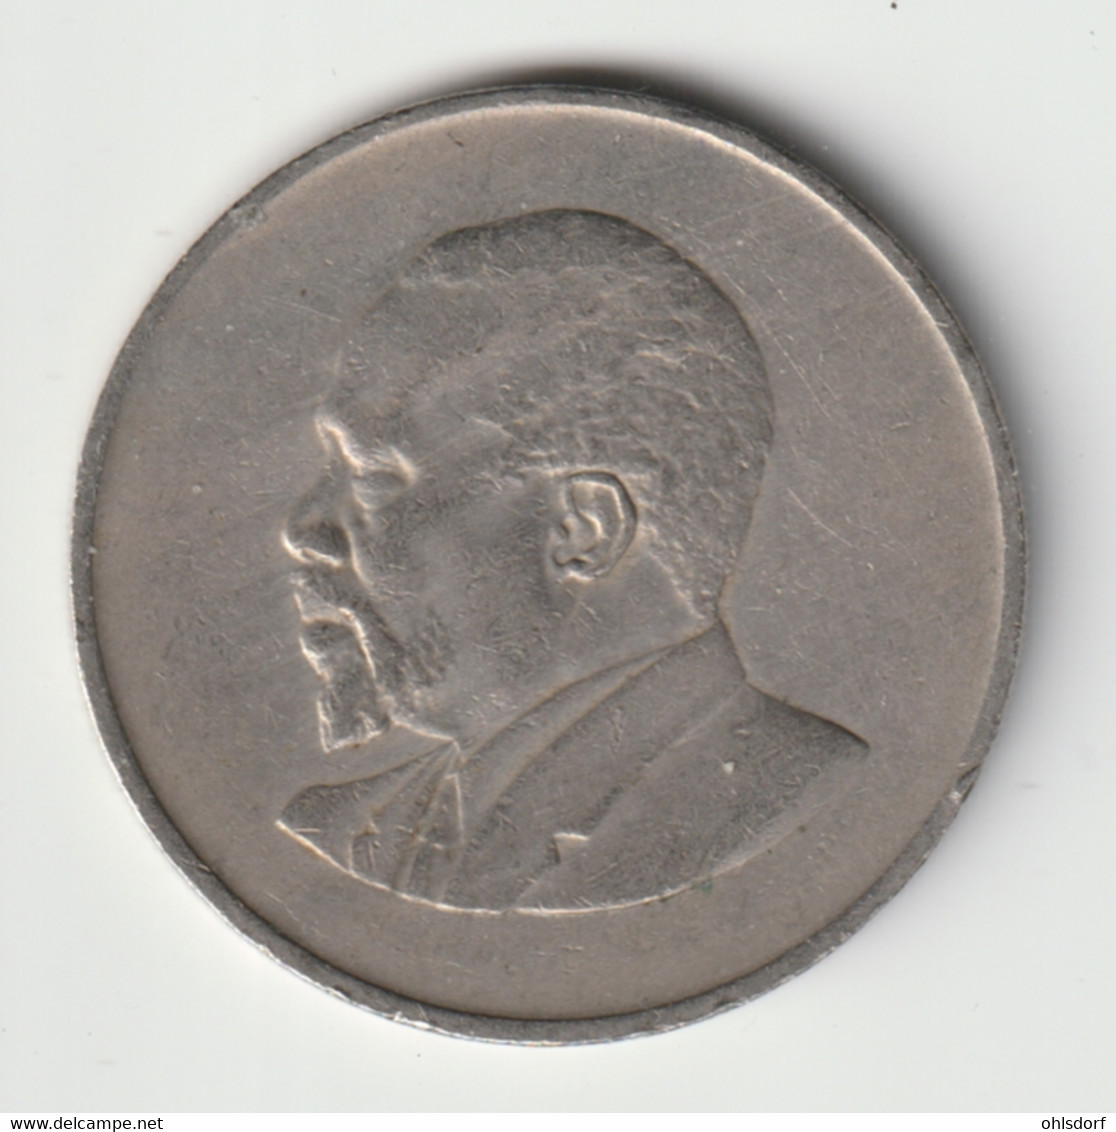 KENYA 1968: 1 Shilling, KM 5 - Kenya